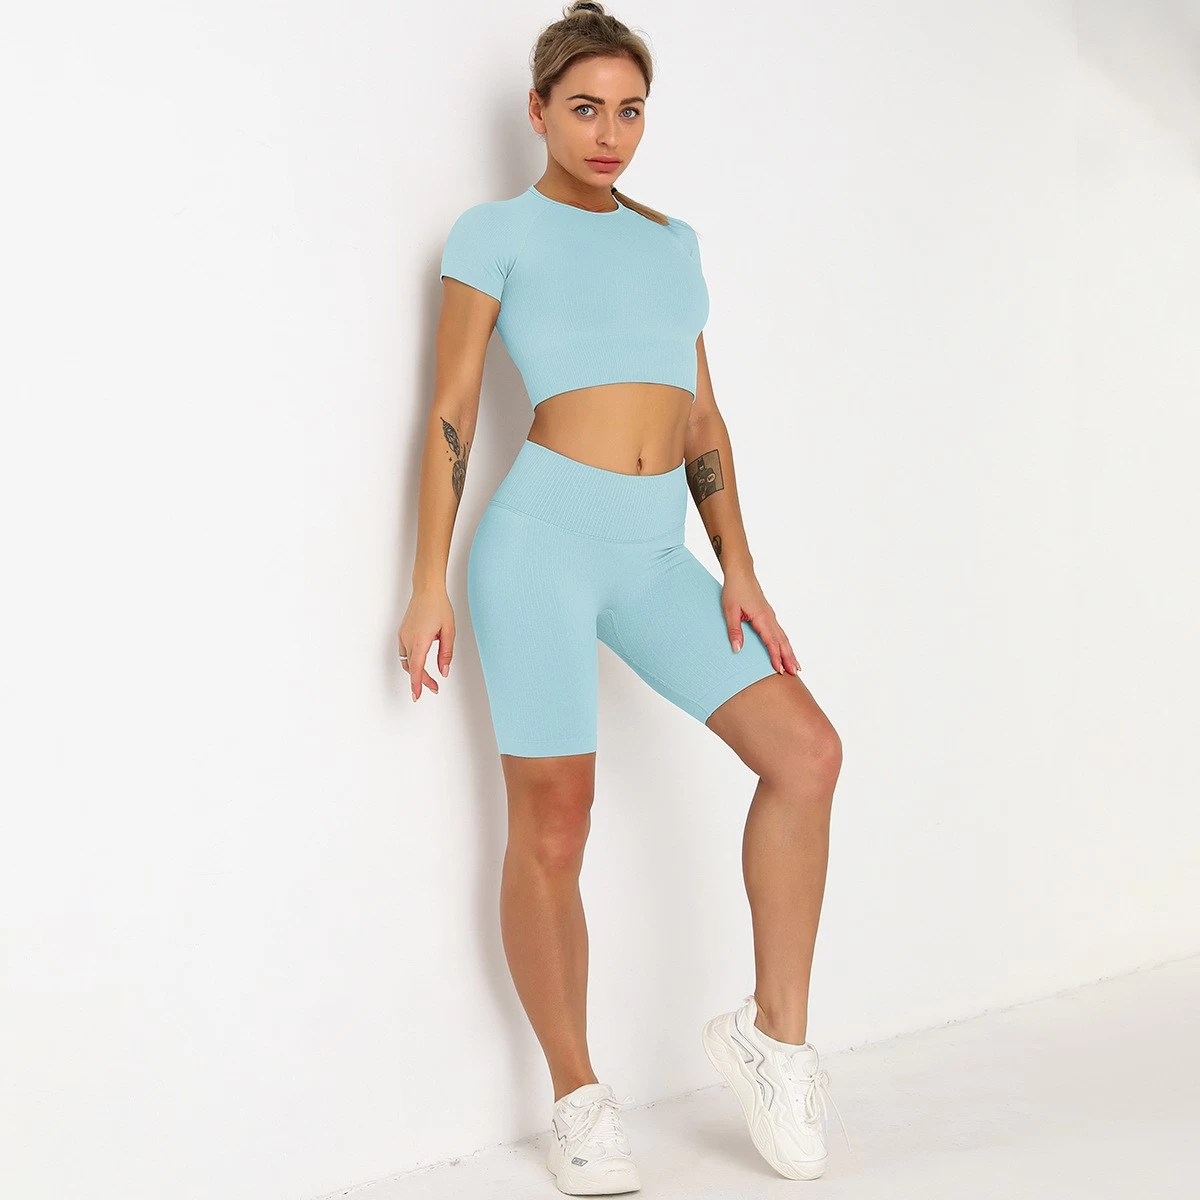 S-SHAPER Women Seamless Yoga Outfits 2 Piece Set Workout Gym Shorts + Short Sleeve Crop Top Manufacturer